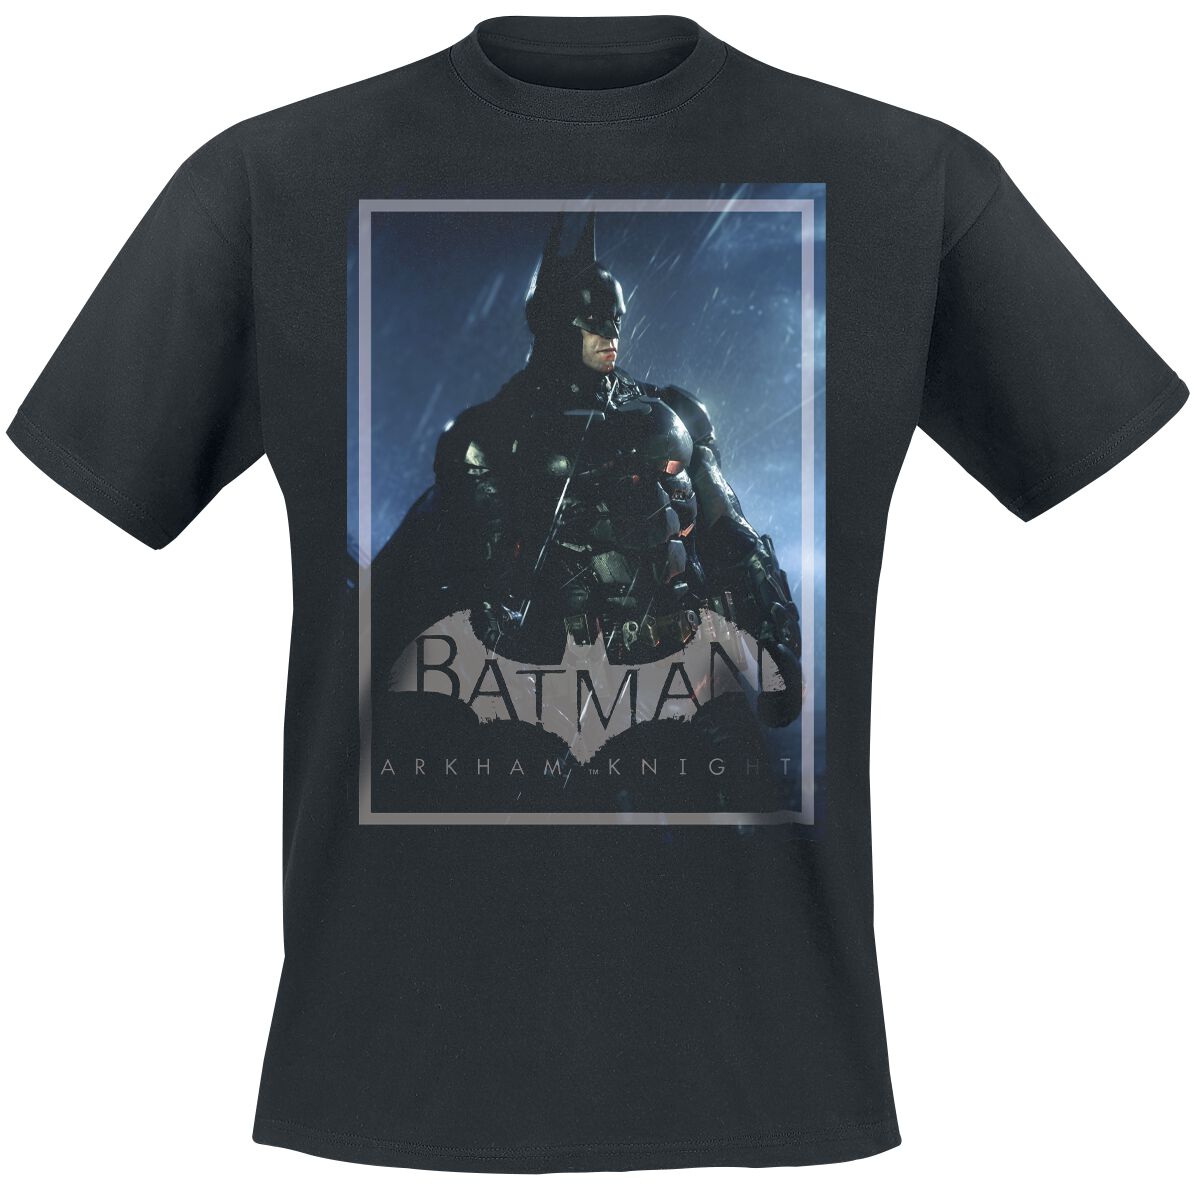 Batman Arkham Knight - Poster T-Shirt black